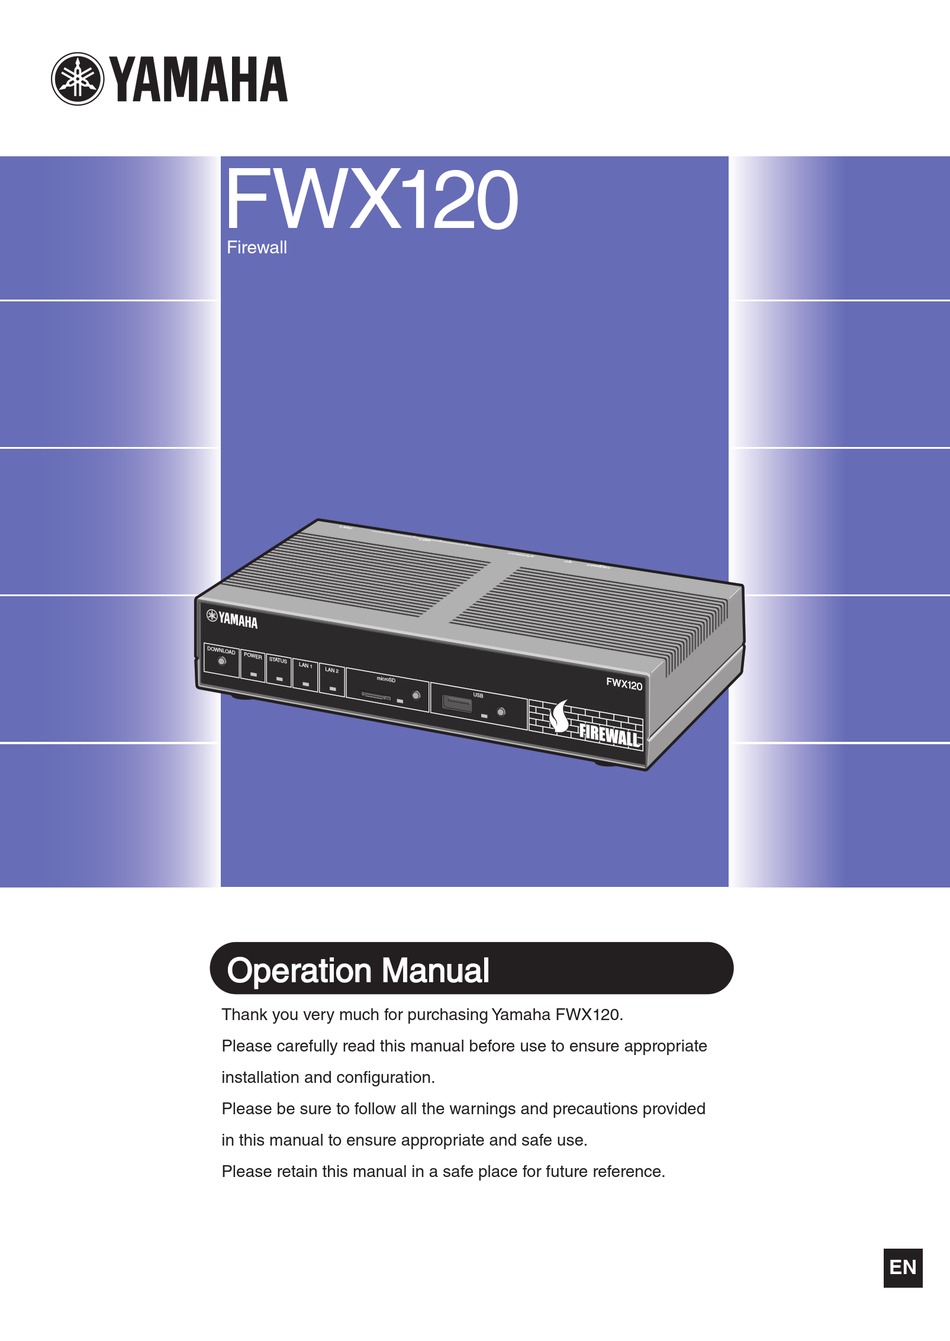 YAMAHA FWX120 OPERATION MANUAL Pdf Download | ManualsLib